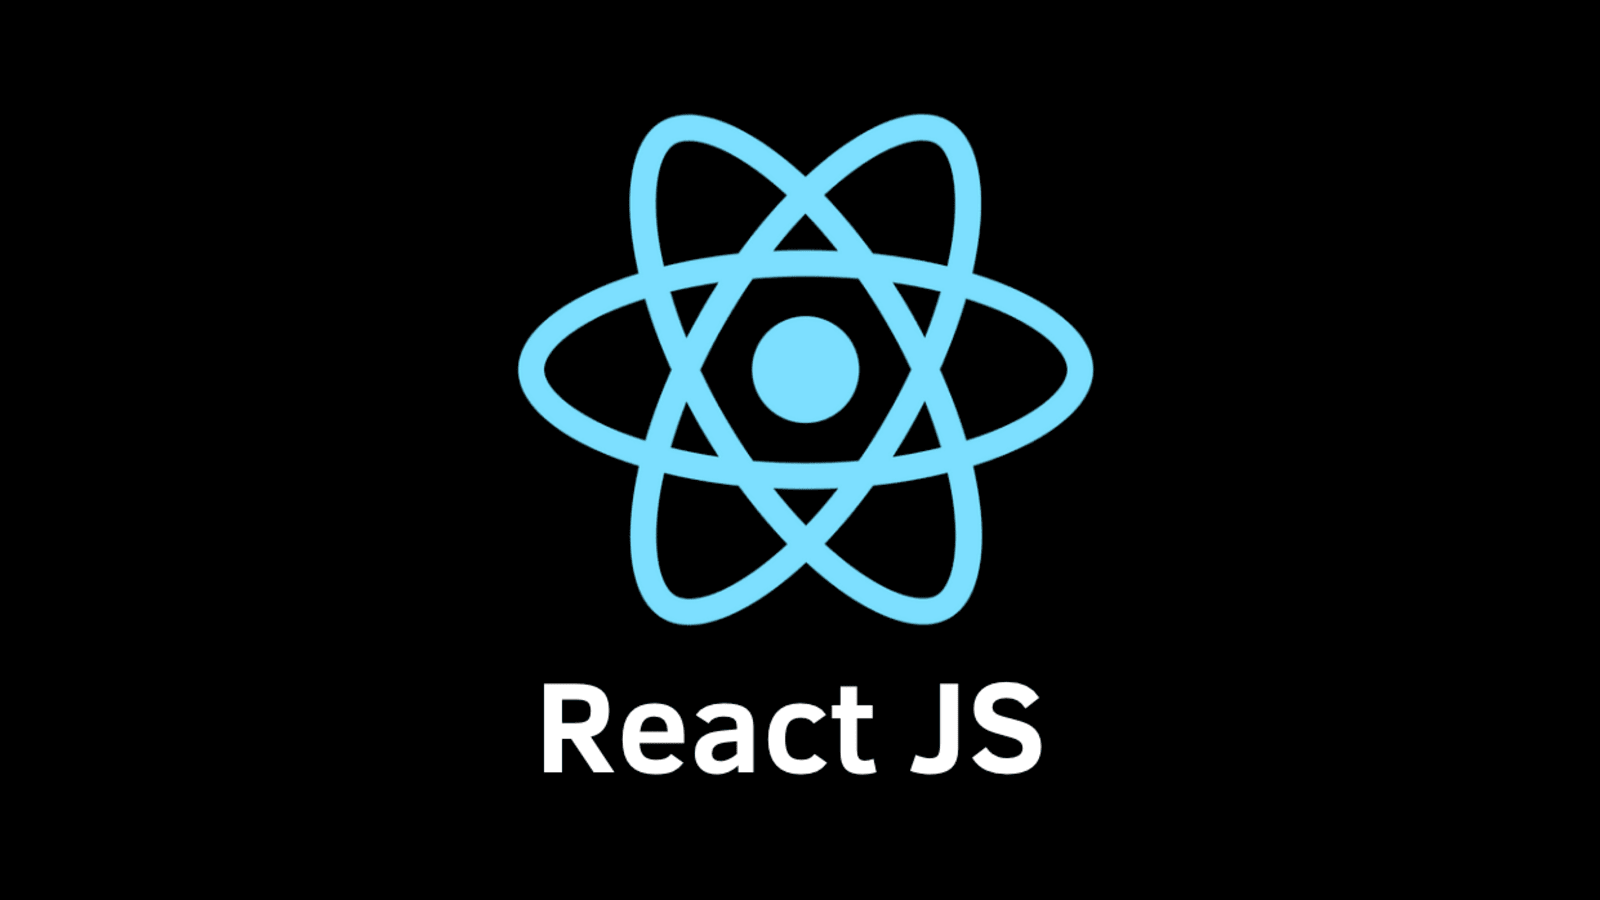 Common Use Cases of ReactJS